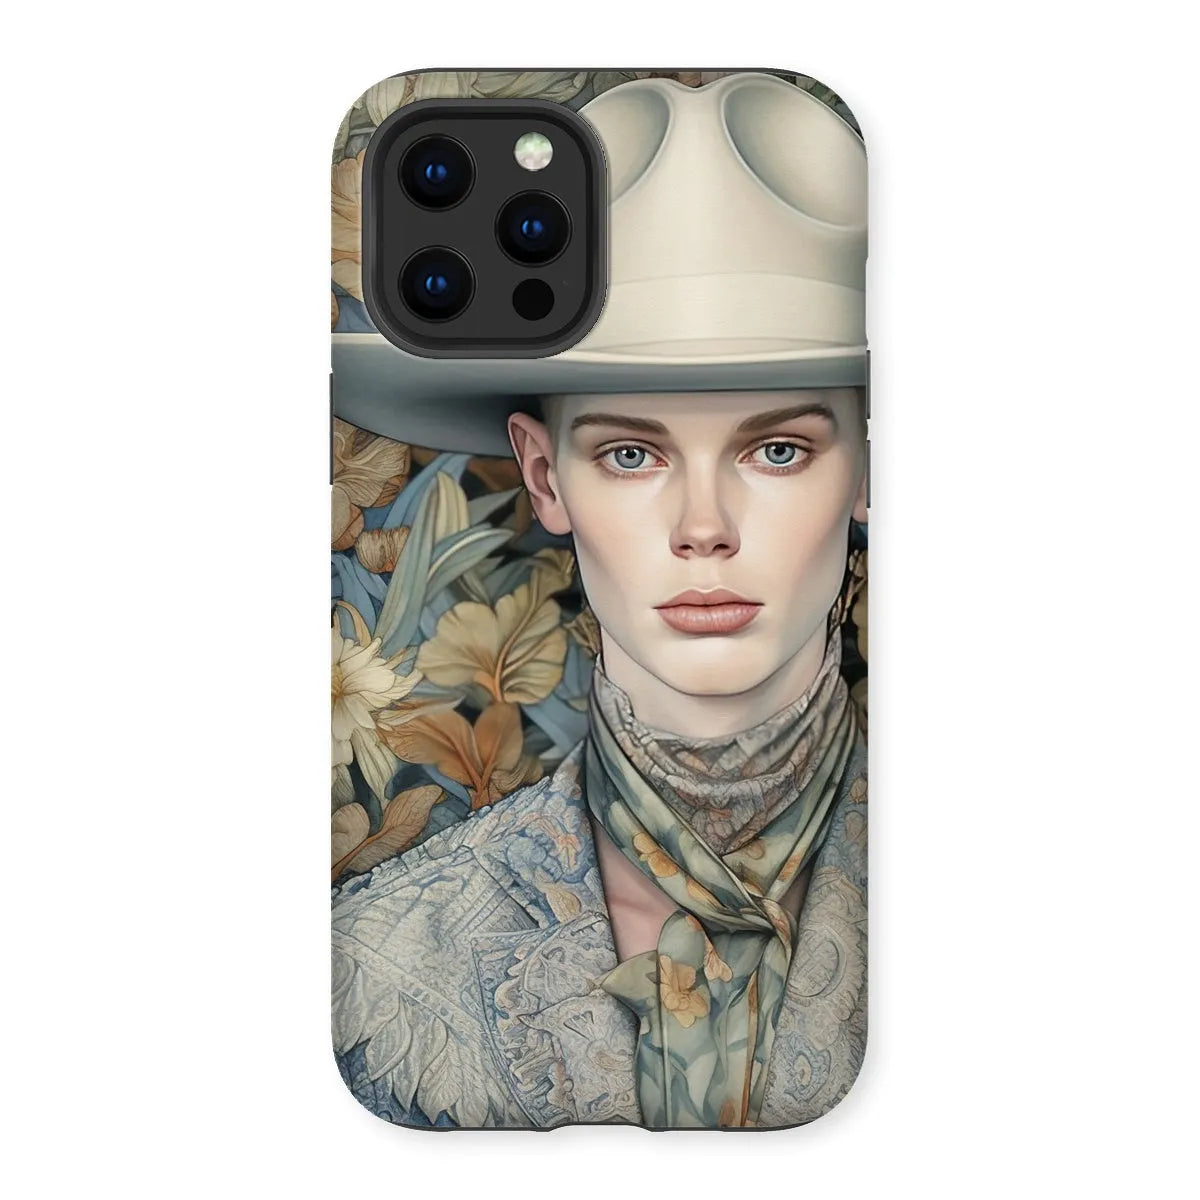 Jasper - Dandy Twink Cowboy Aesthetic Art Phone Case - Iphone 12 Pro Max / Matte - Mobile Phone Cases - Aesthetic Art